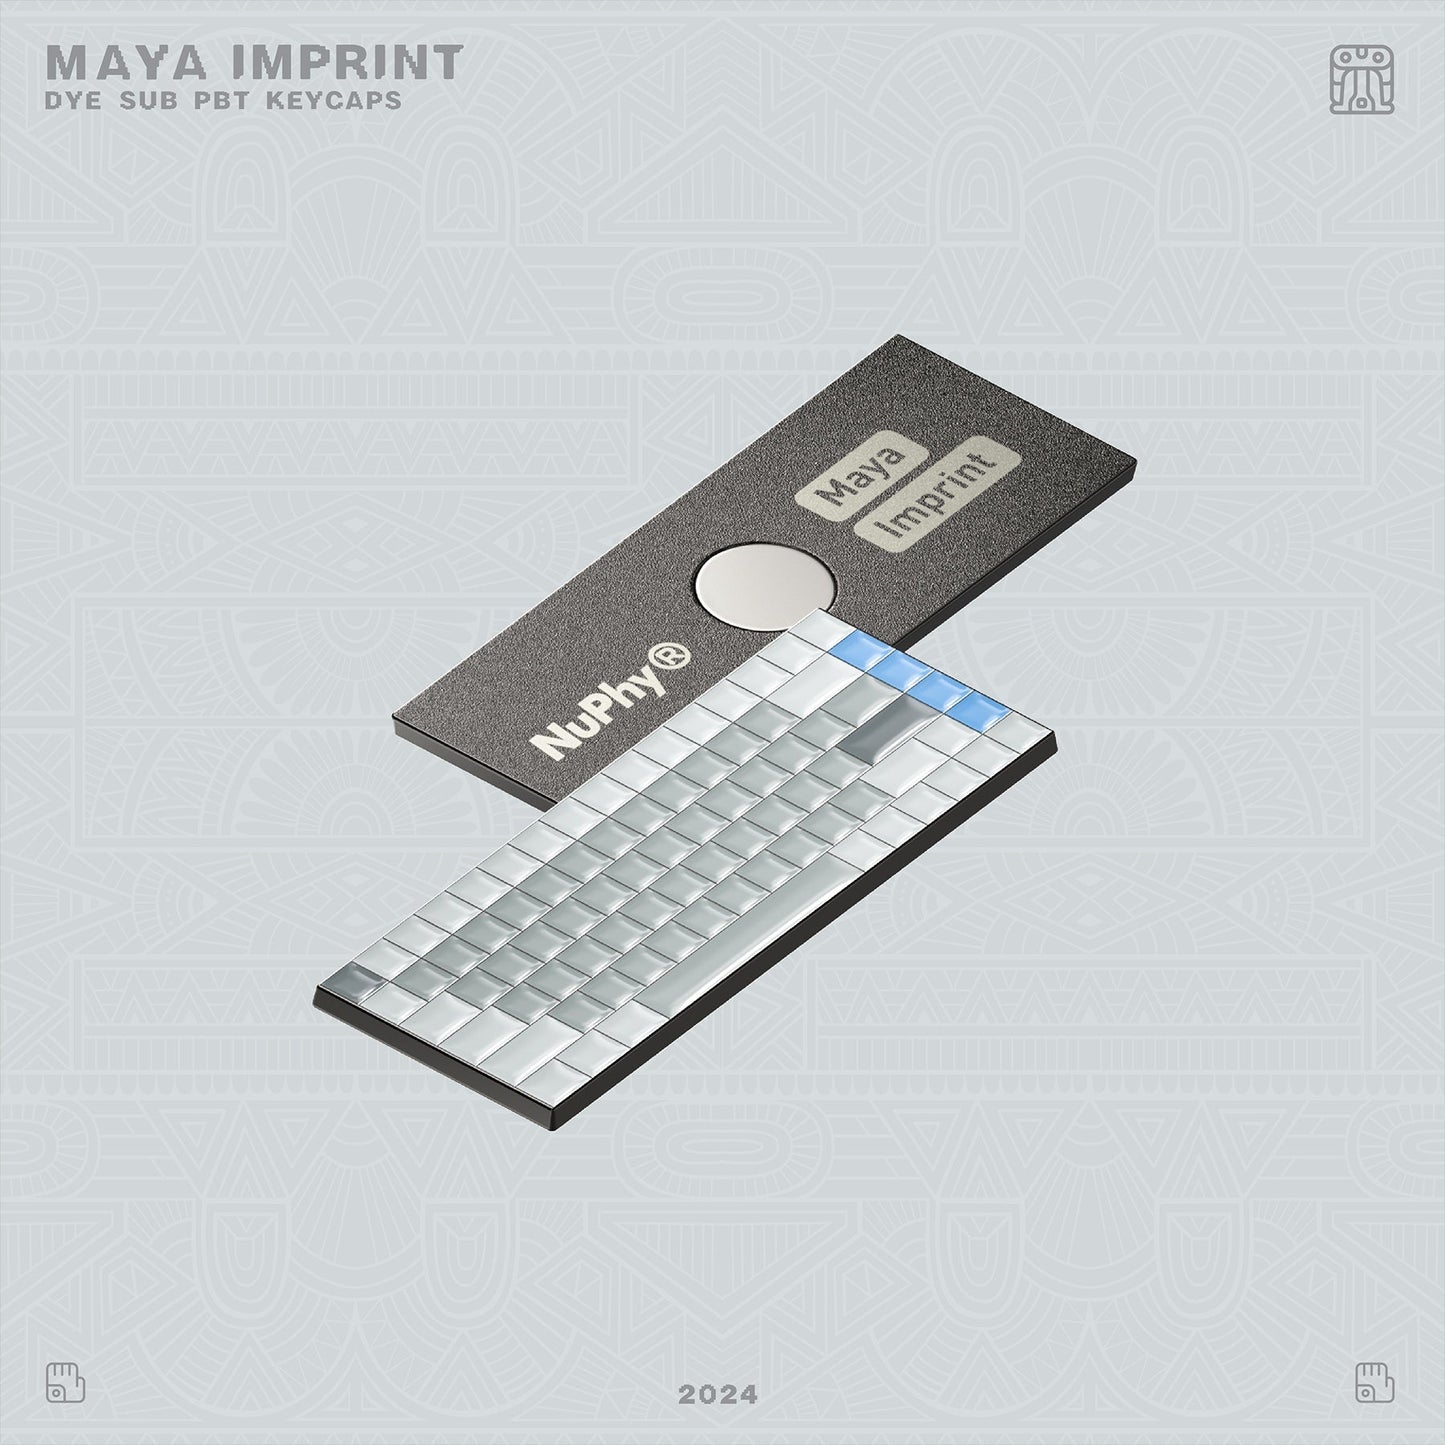 NuPhy x Keytok Maya Imprint nSA Low-Profile Keycaps